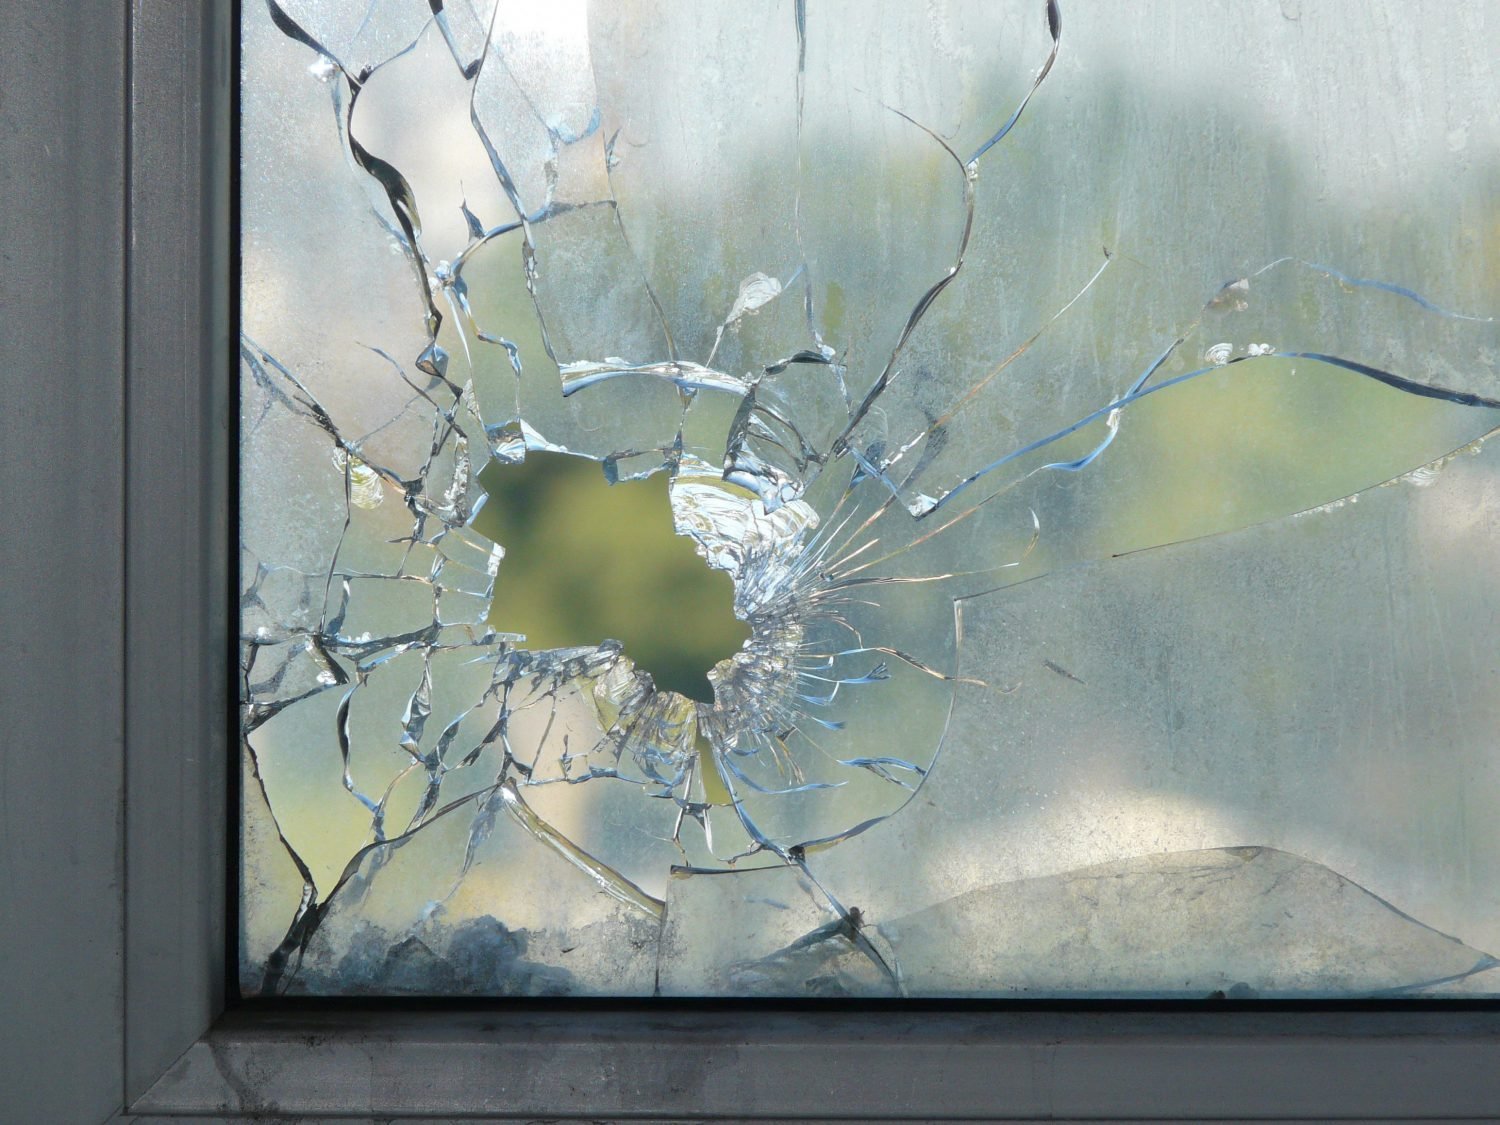 Трещина на окне. Разбитое окно. Разбитое стекло в окне. Стекло окно. Разбитый стеклопакет.